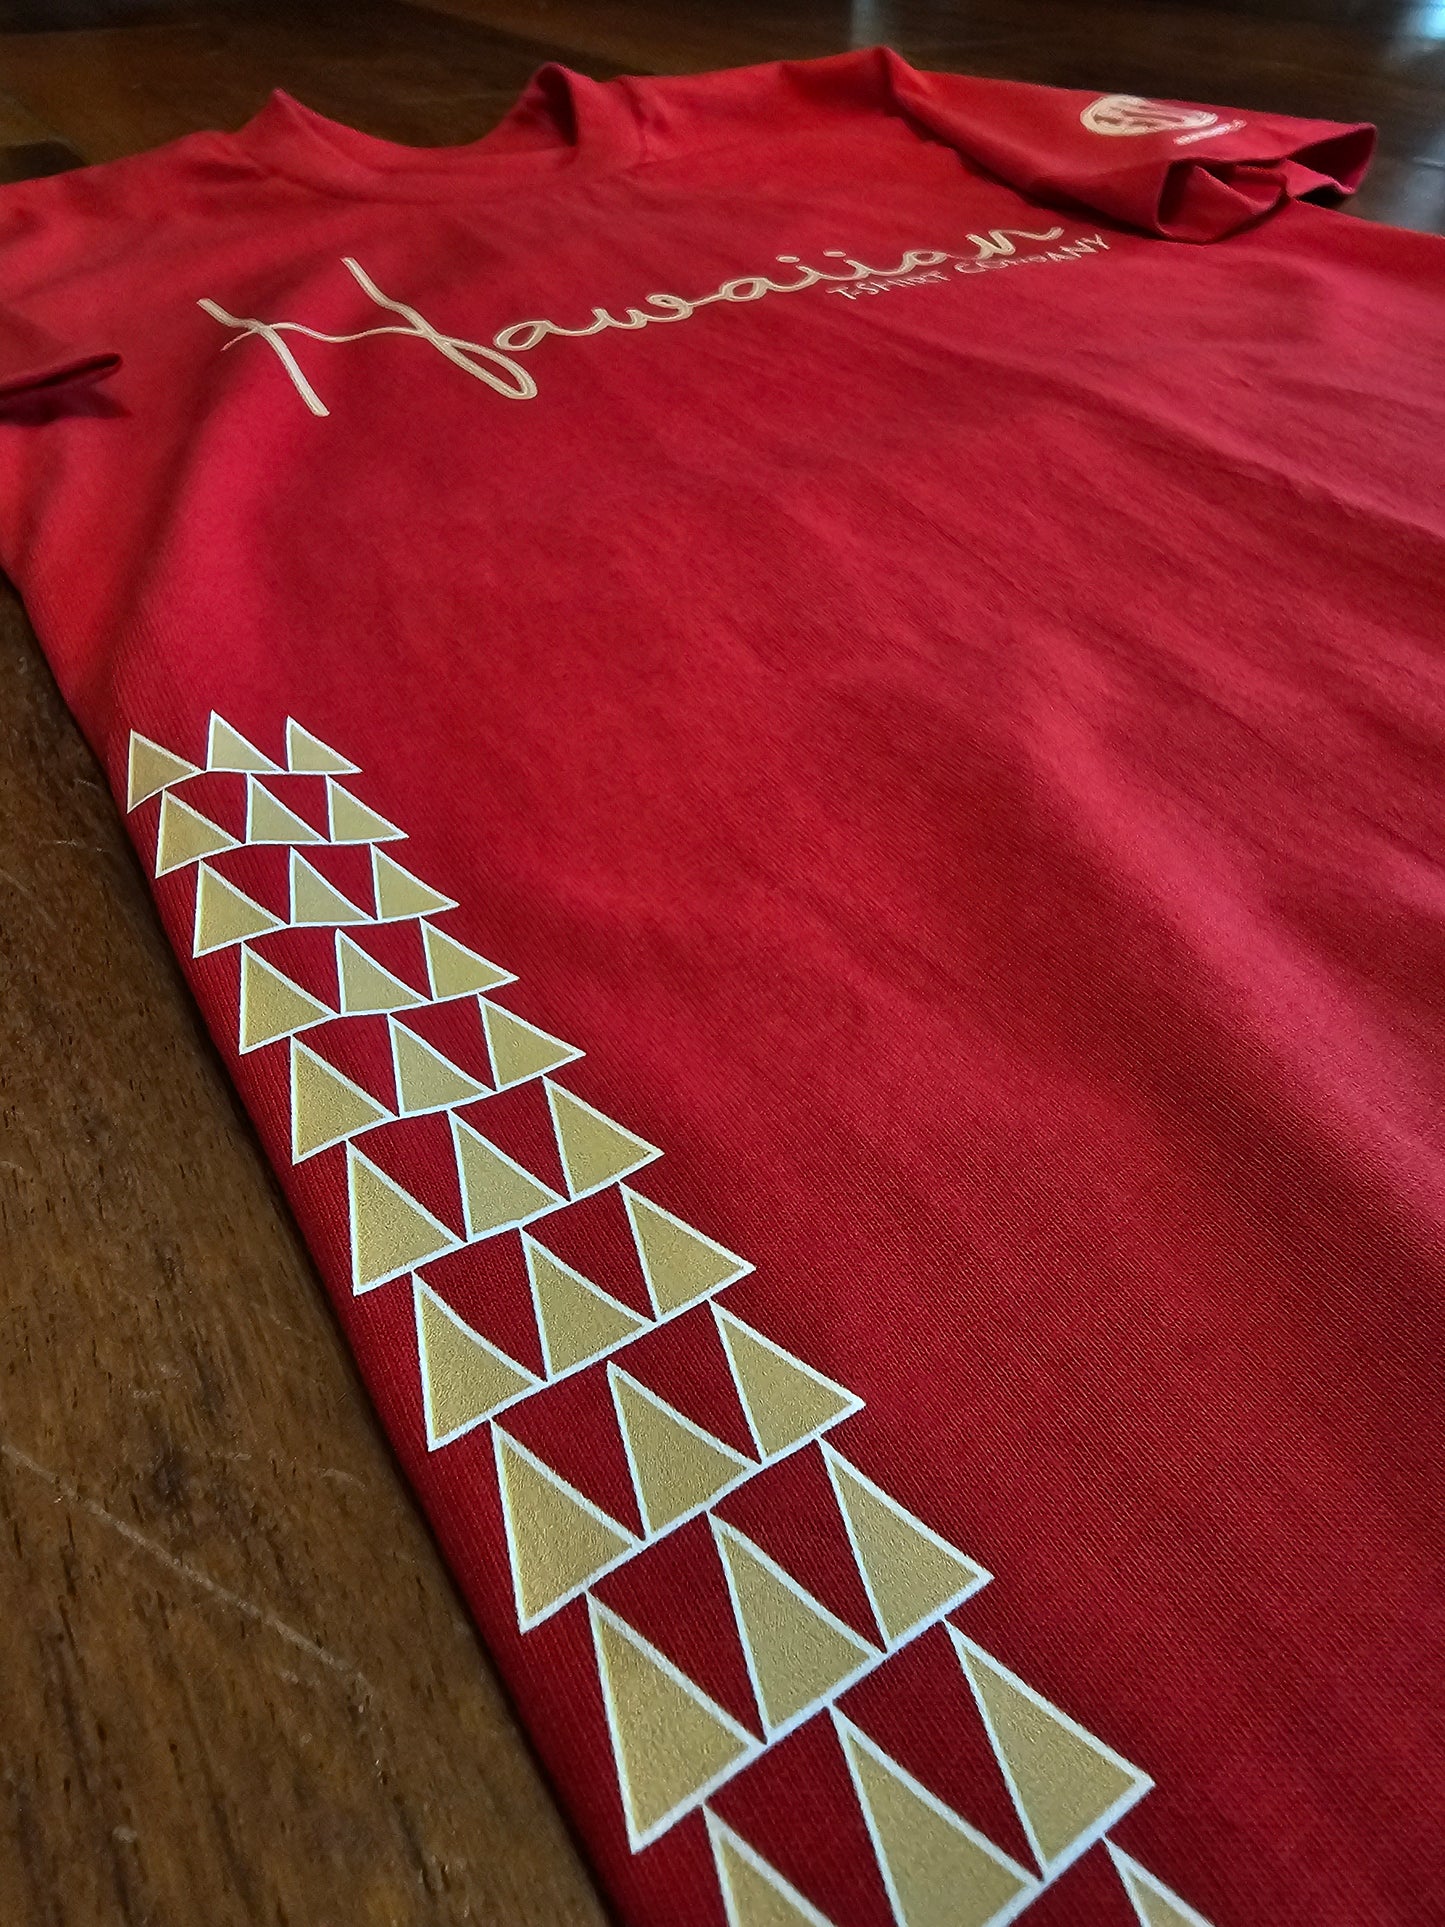 Two-tone classic design tshirt "49er Faithful"